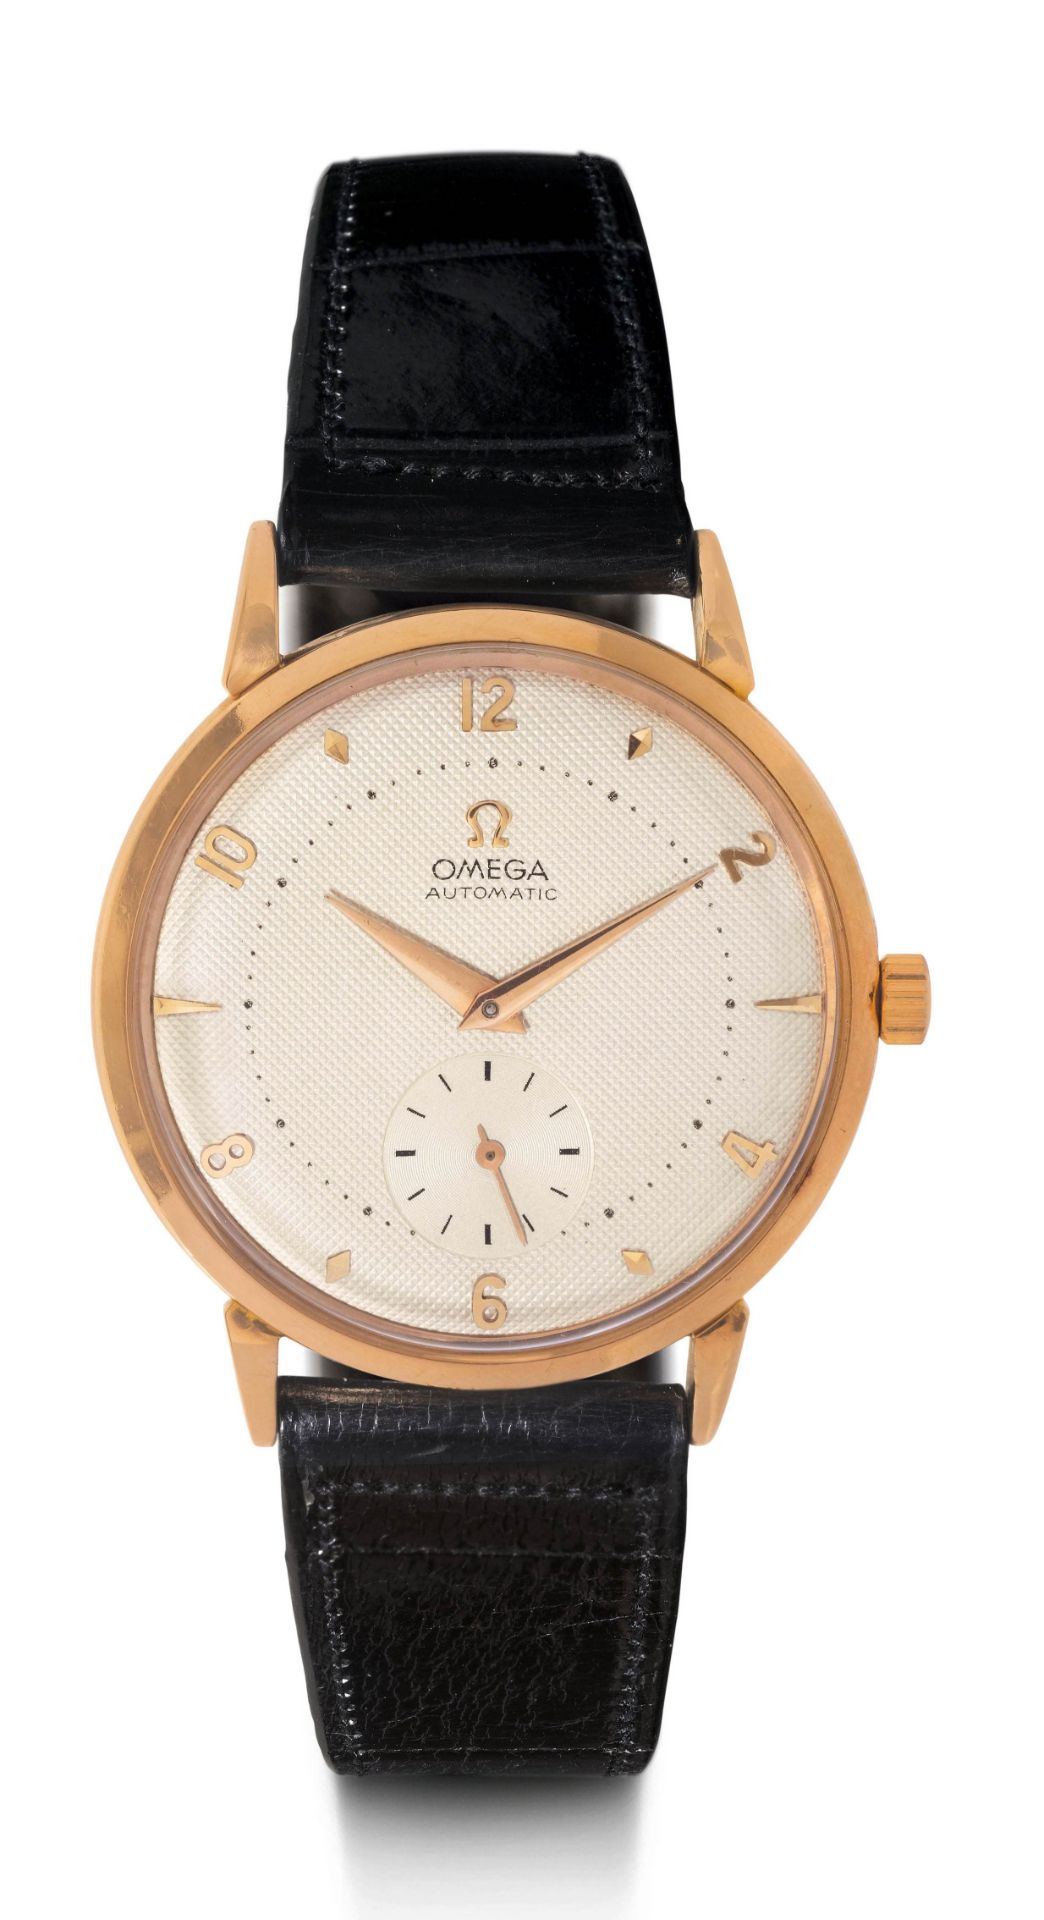 Omega, sehr attraktive Automatic-Uhr.